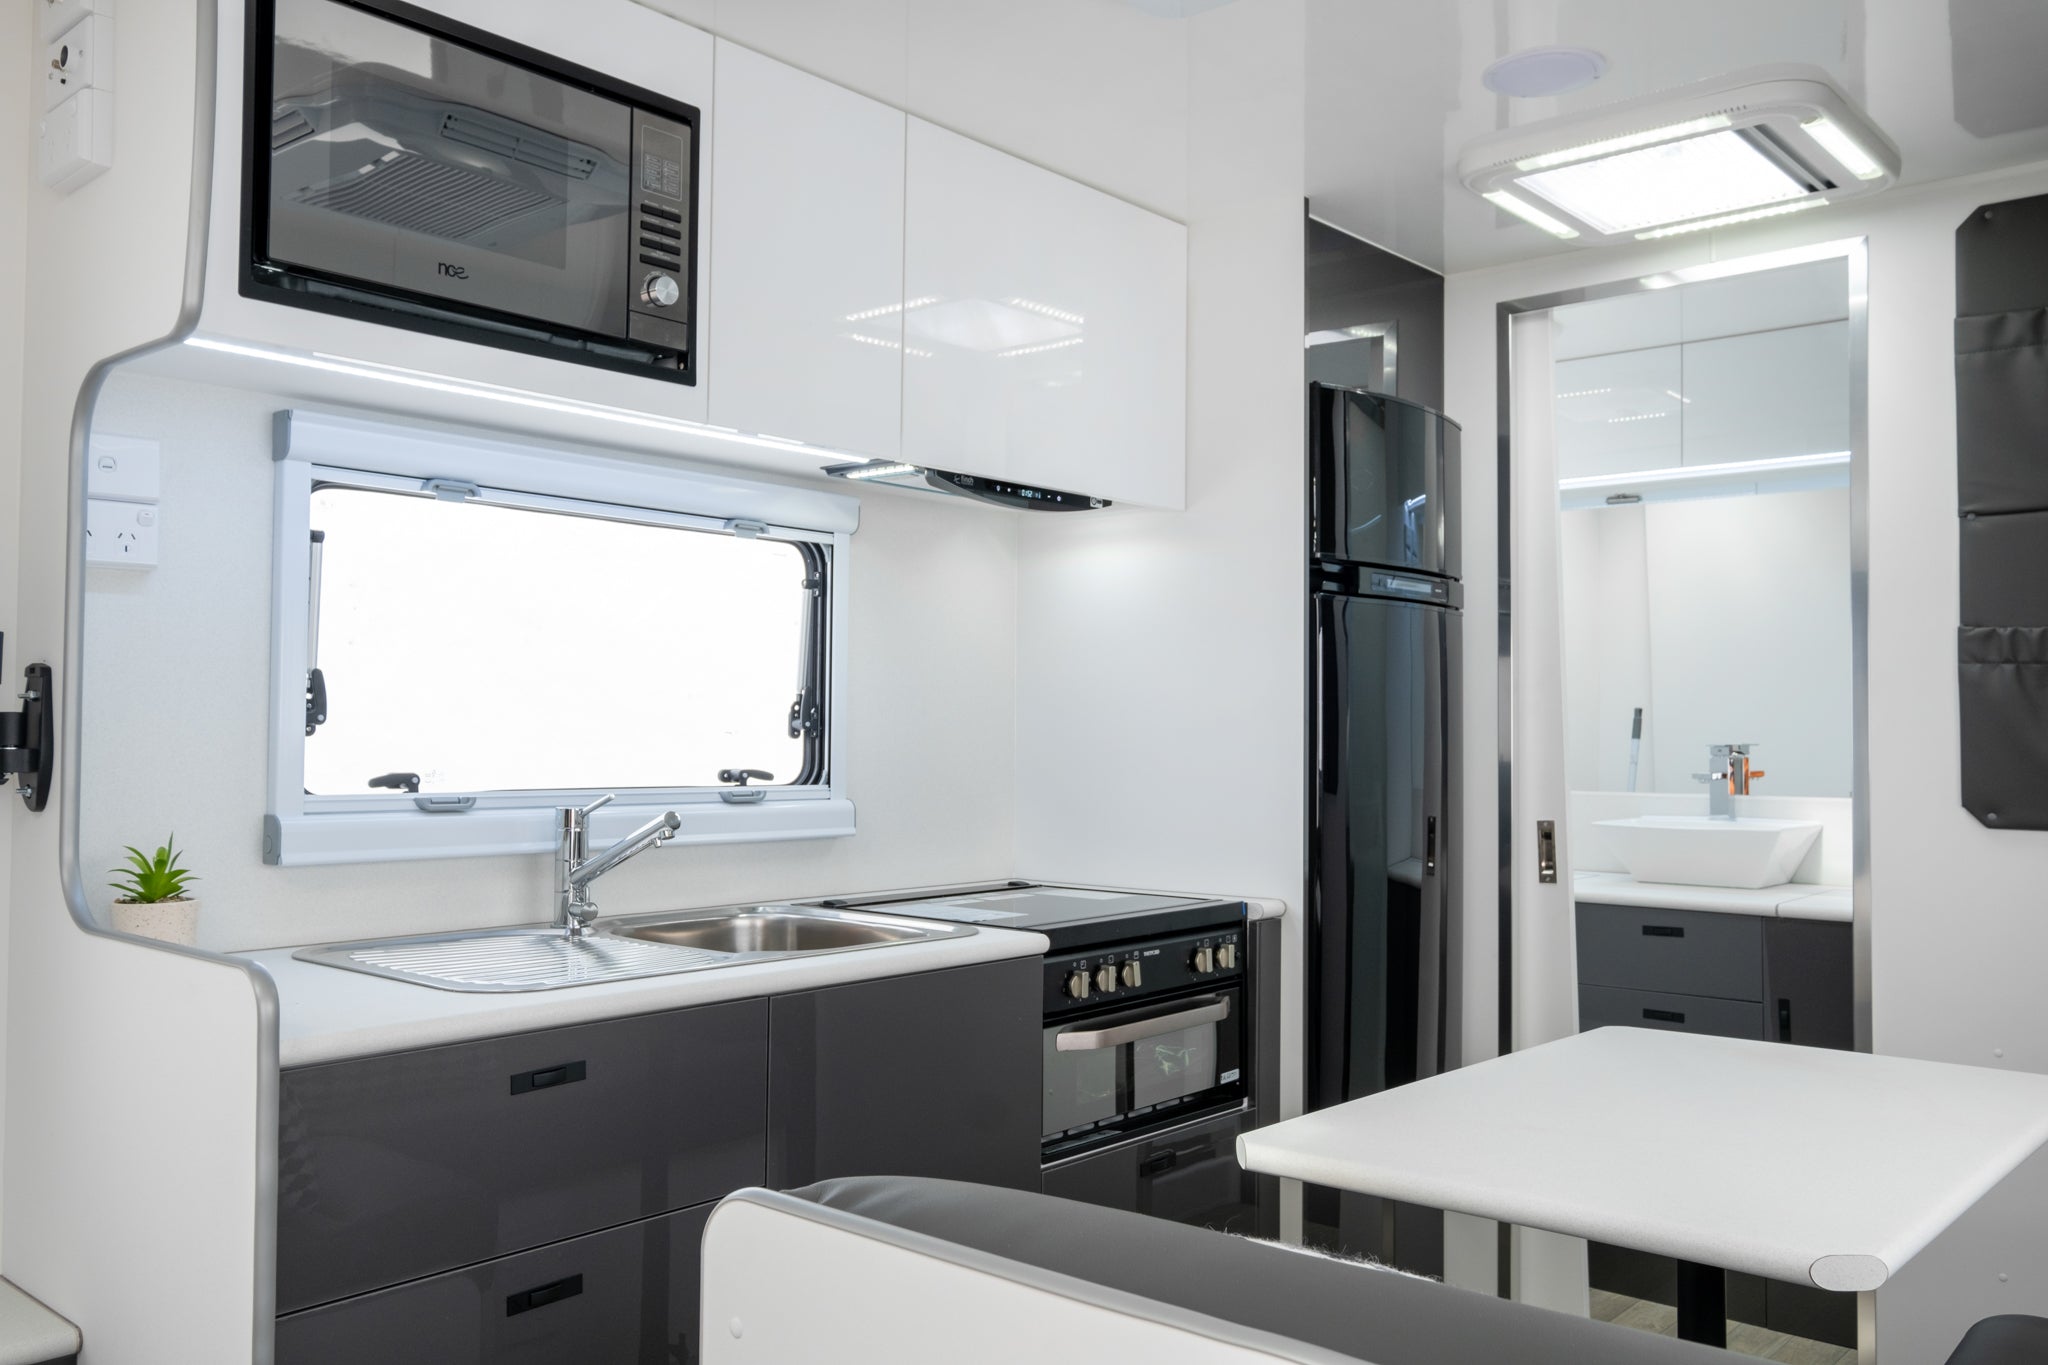 Coromal Thrill Seeker 18 Couples caravan microwave, kitchen, fridge and bathroom view